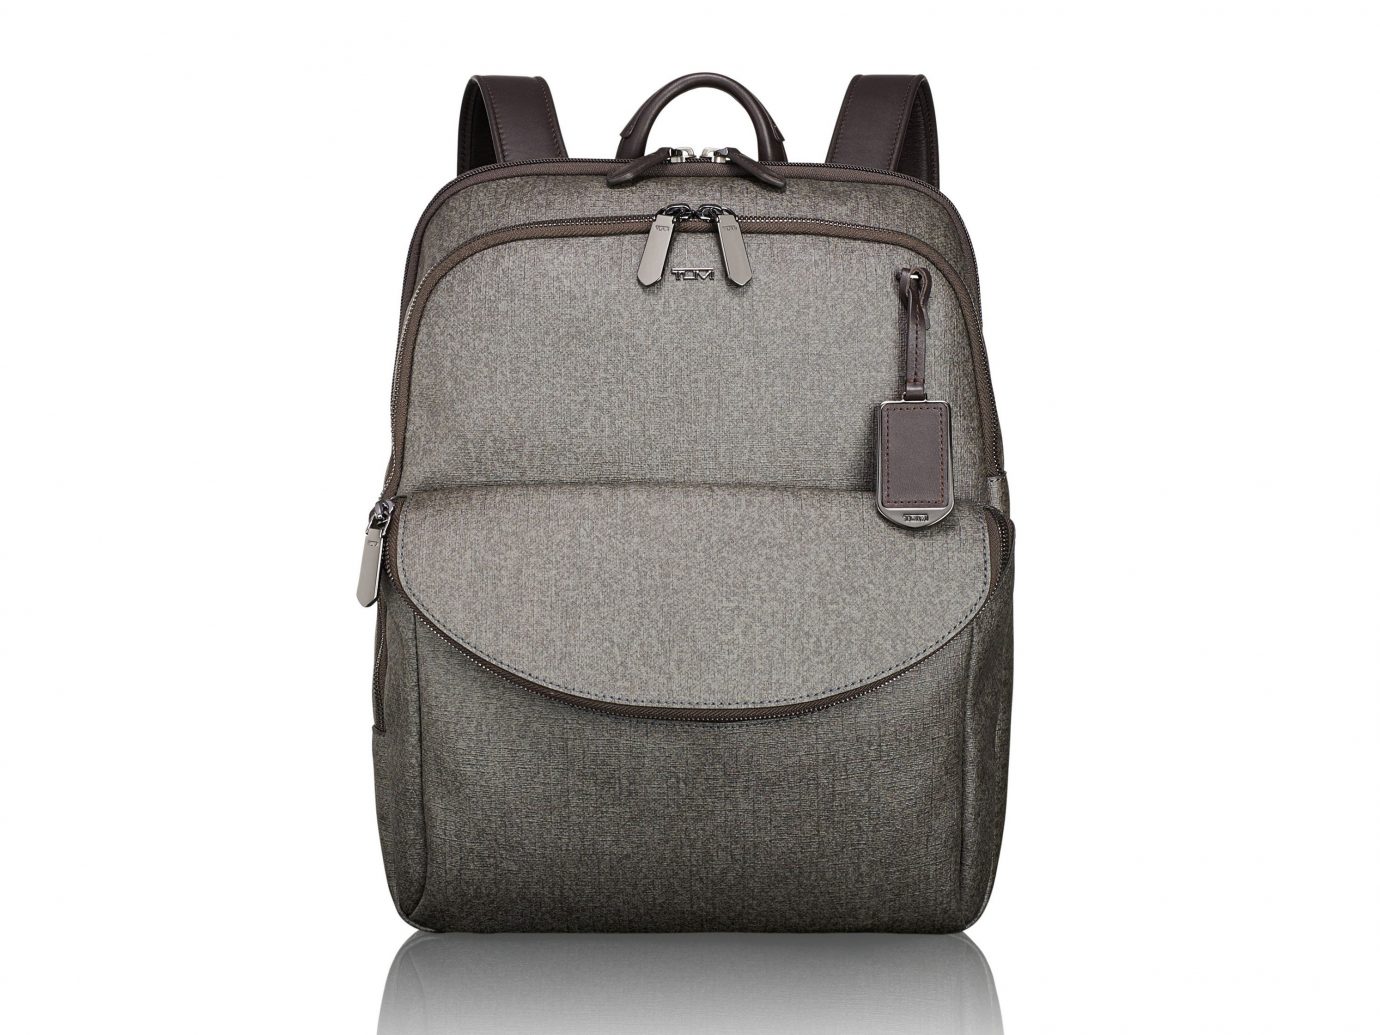 Style + Design bag accessory product backpack case shoulder bag product design hand luggage leather luggage & bags baggage pocket handbag